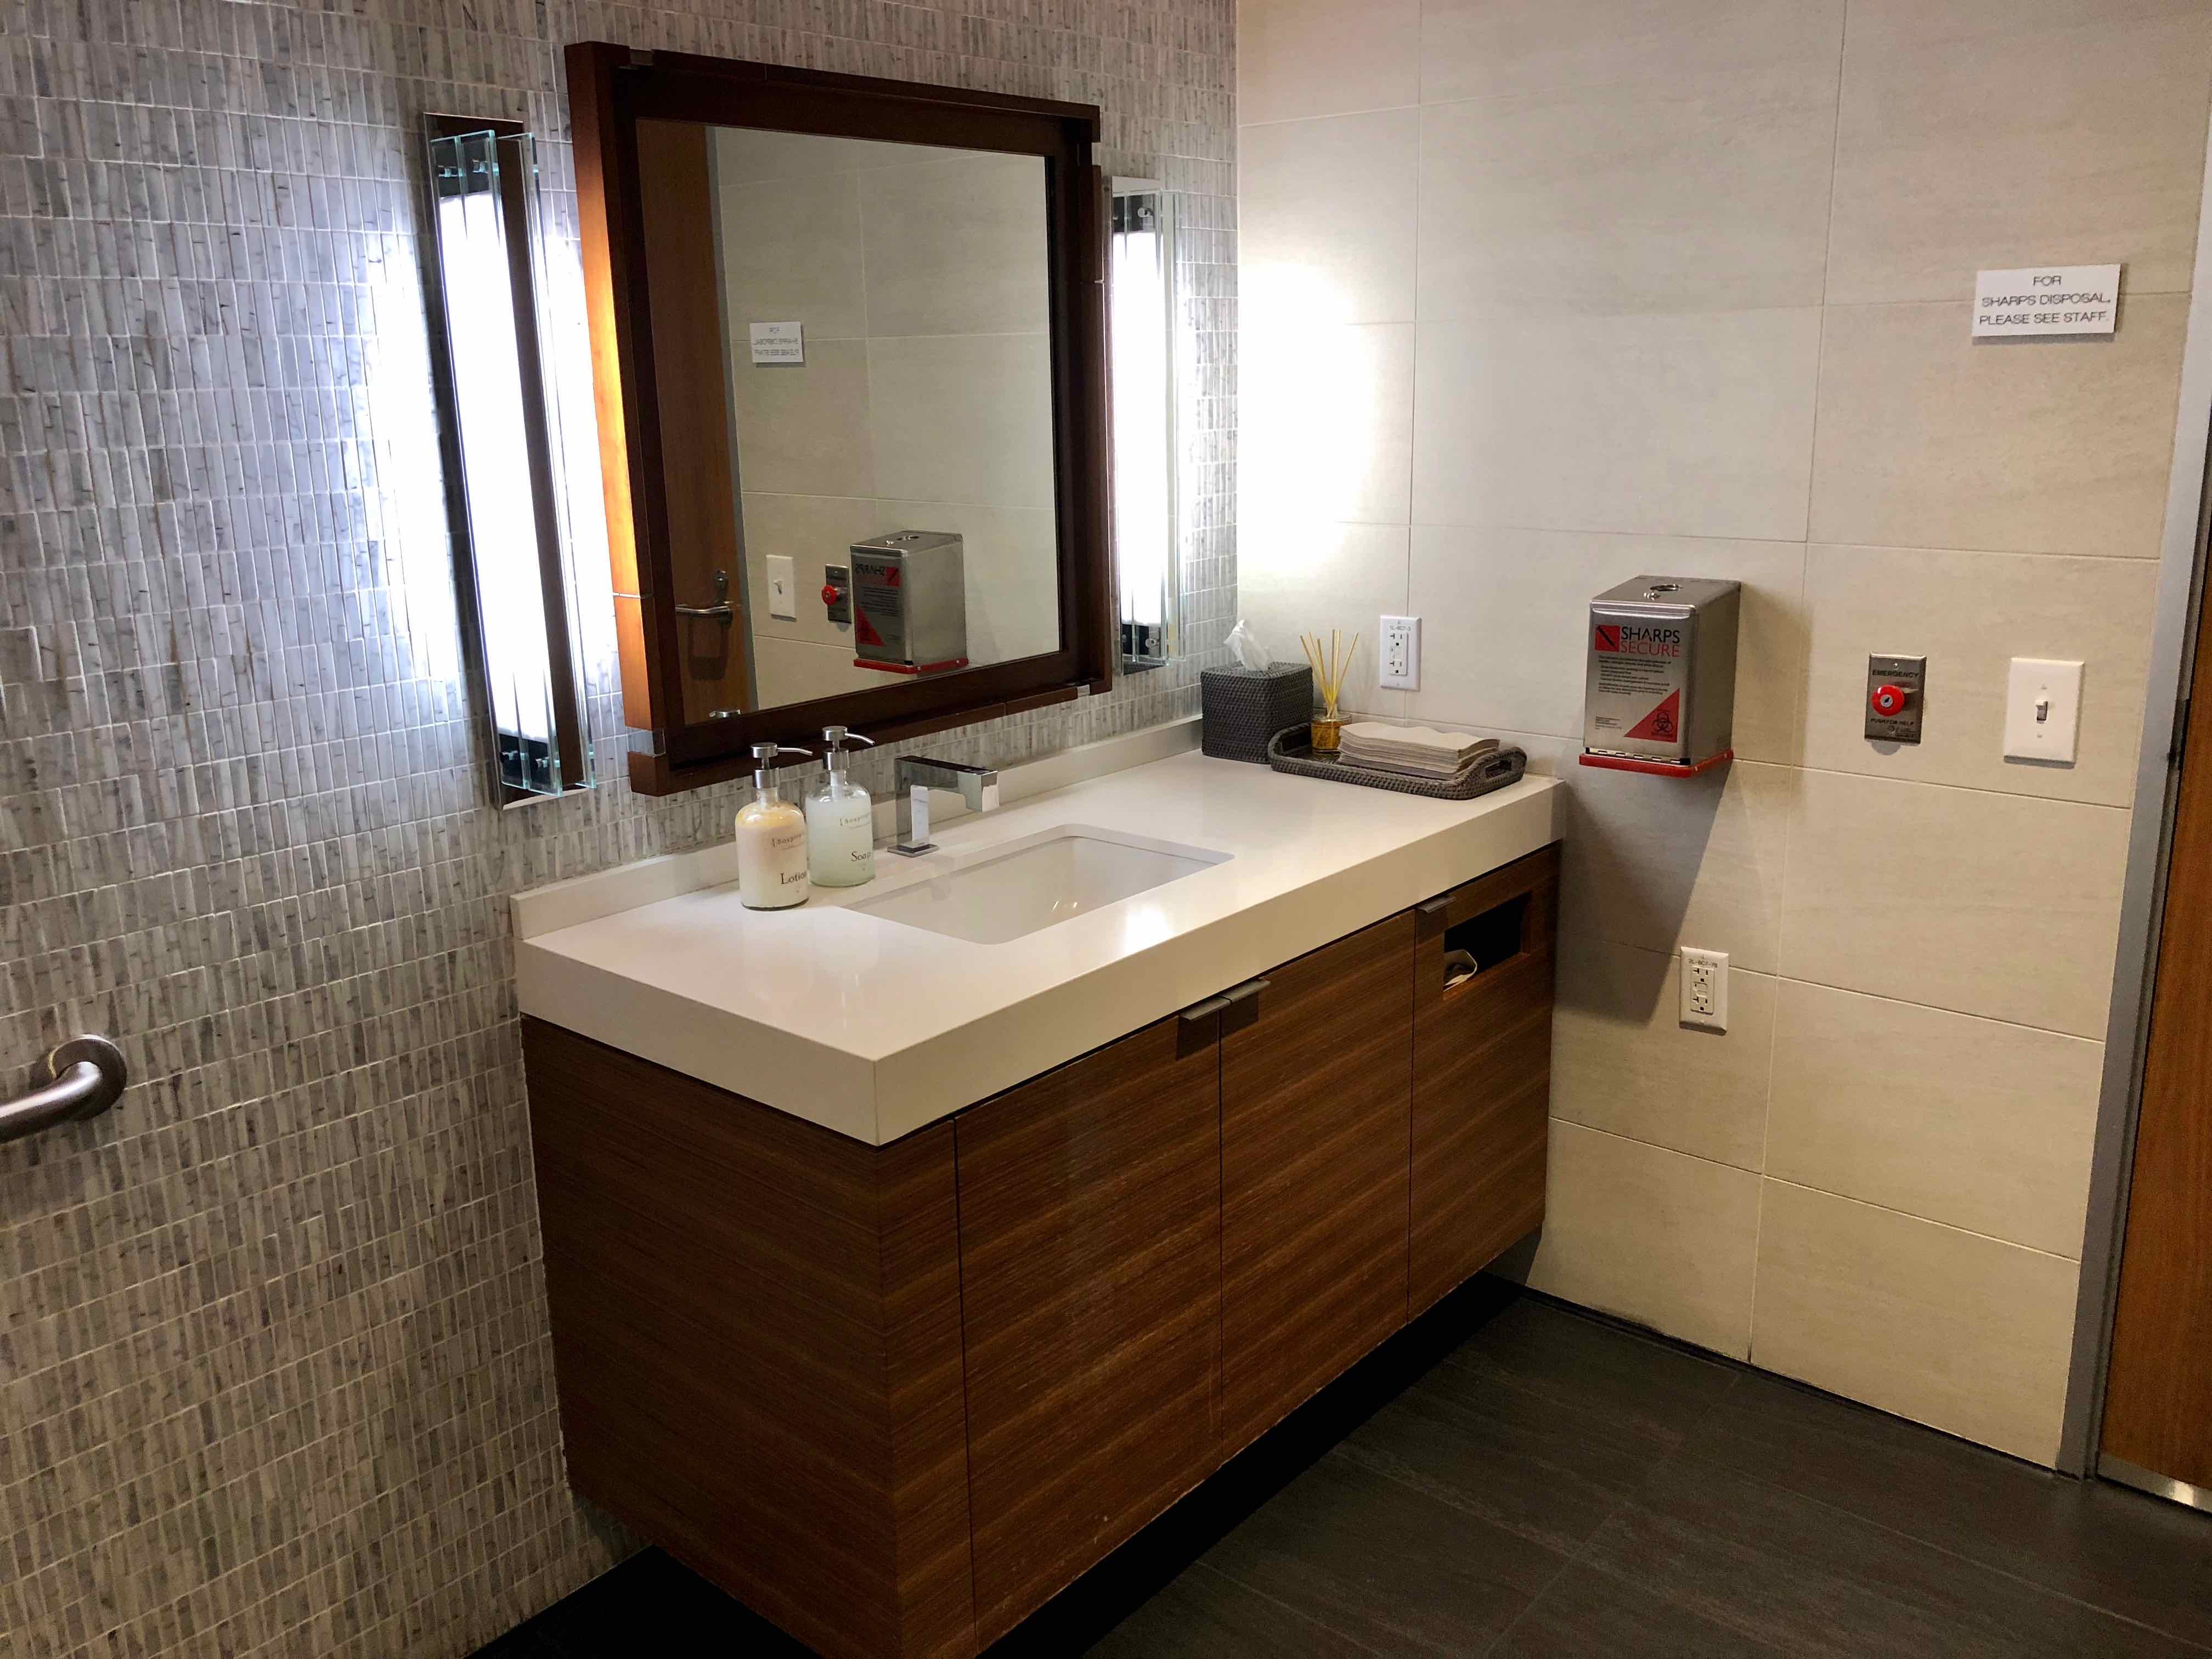 Star Alliance First Class LAX Lounge bathroom